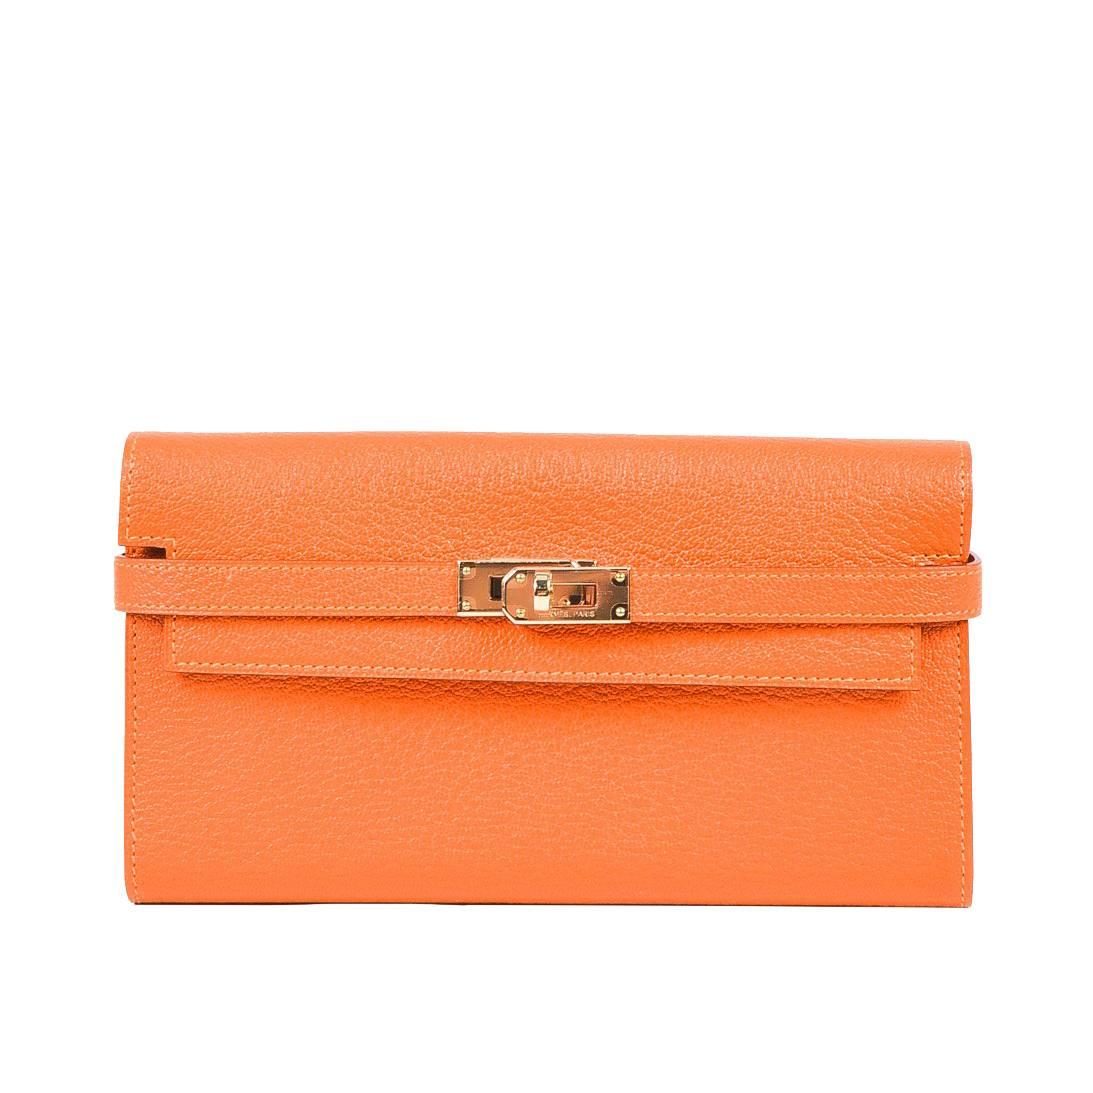 Hermes NIB Orange "Feu" Gold Plated Chevre Mysore Leather Long "Kelly" Wallet For Sale